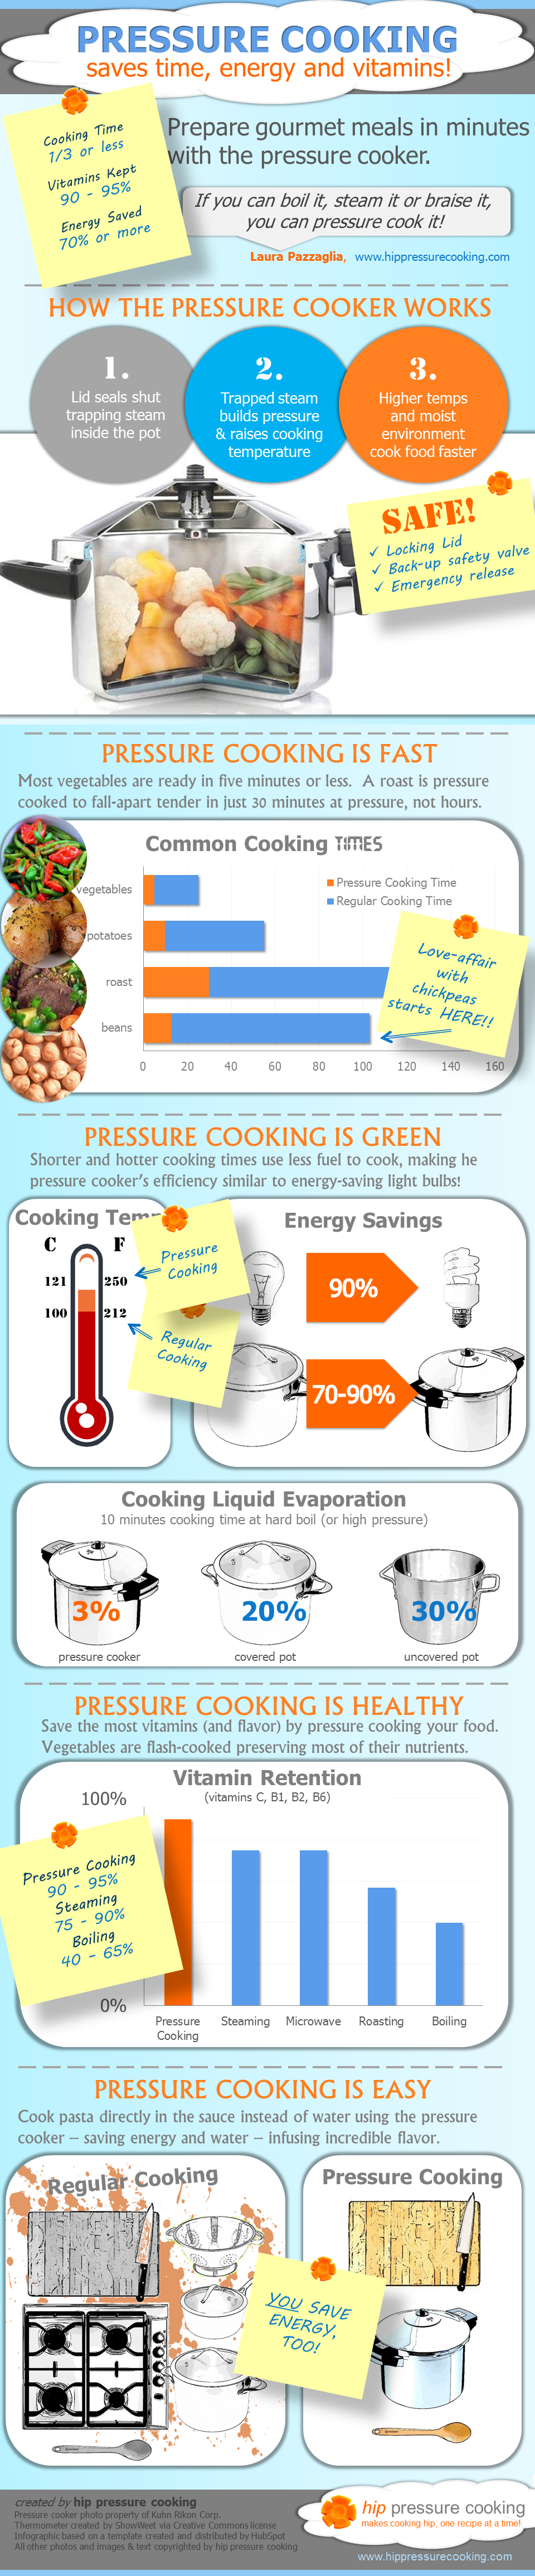 Pressure Cooking Saves Time, Energy & Vitamins!